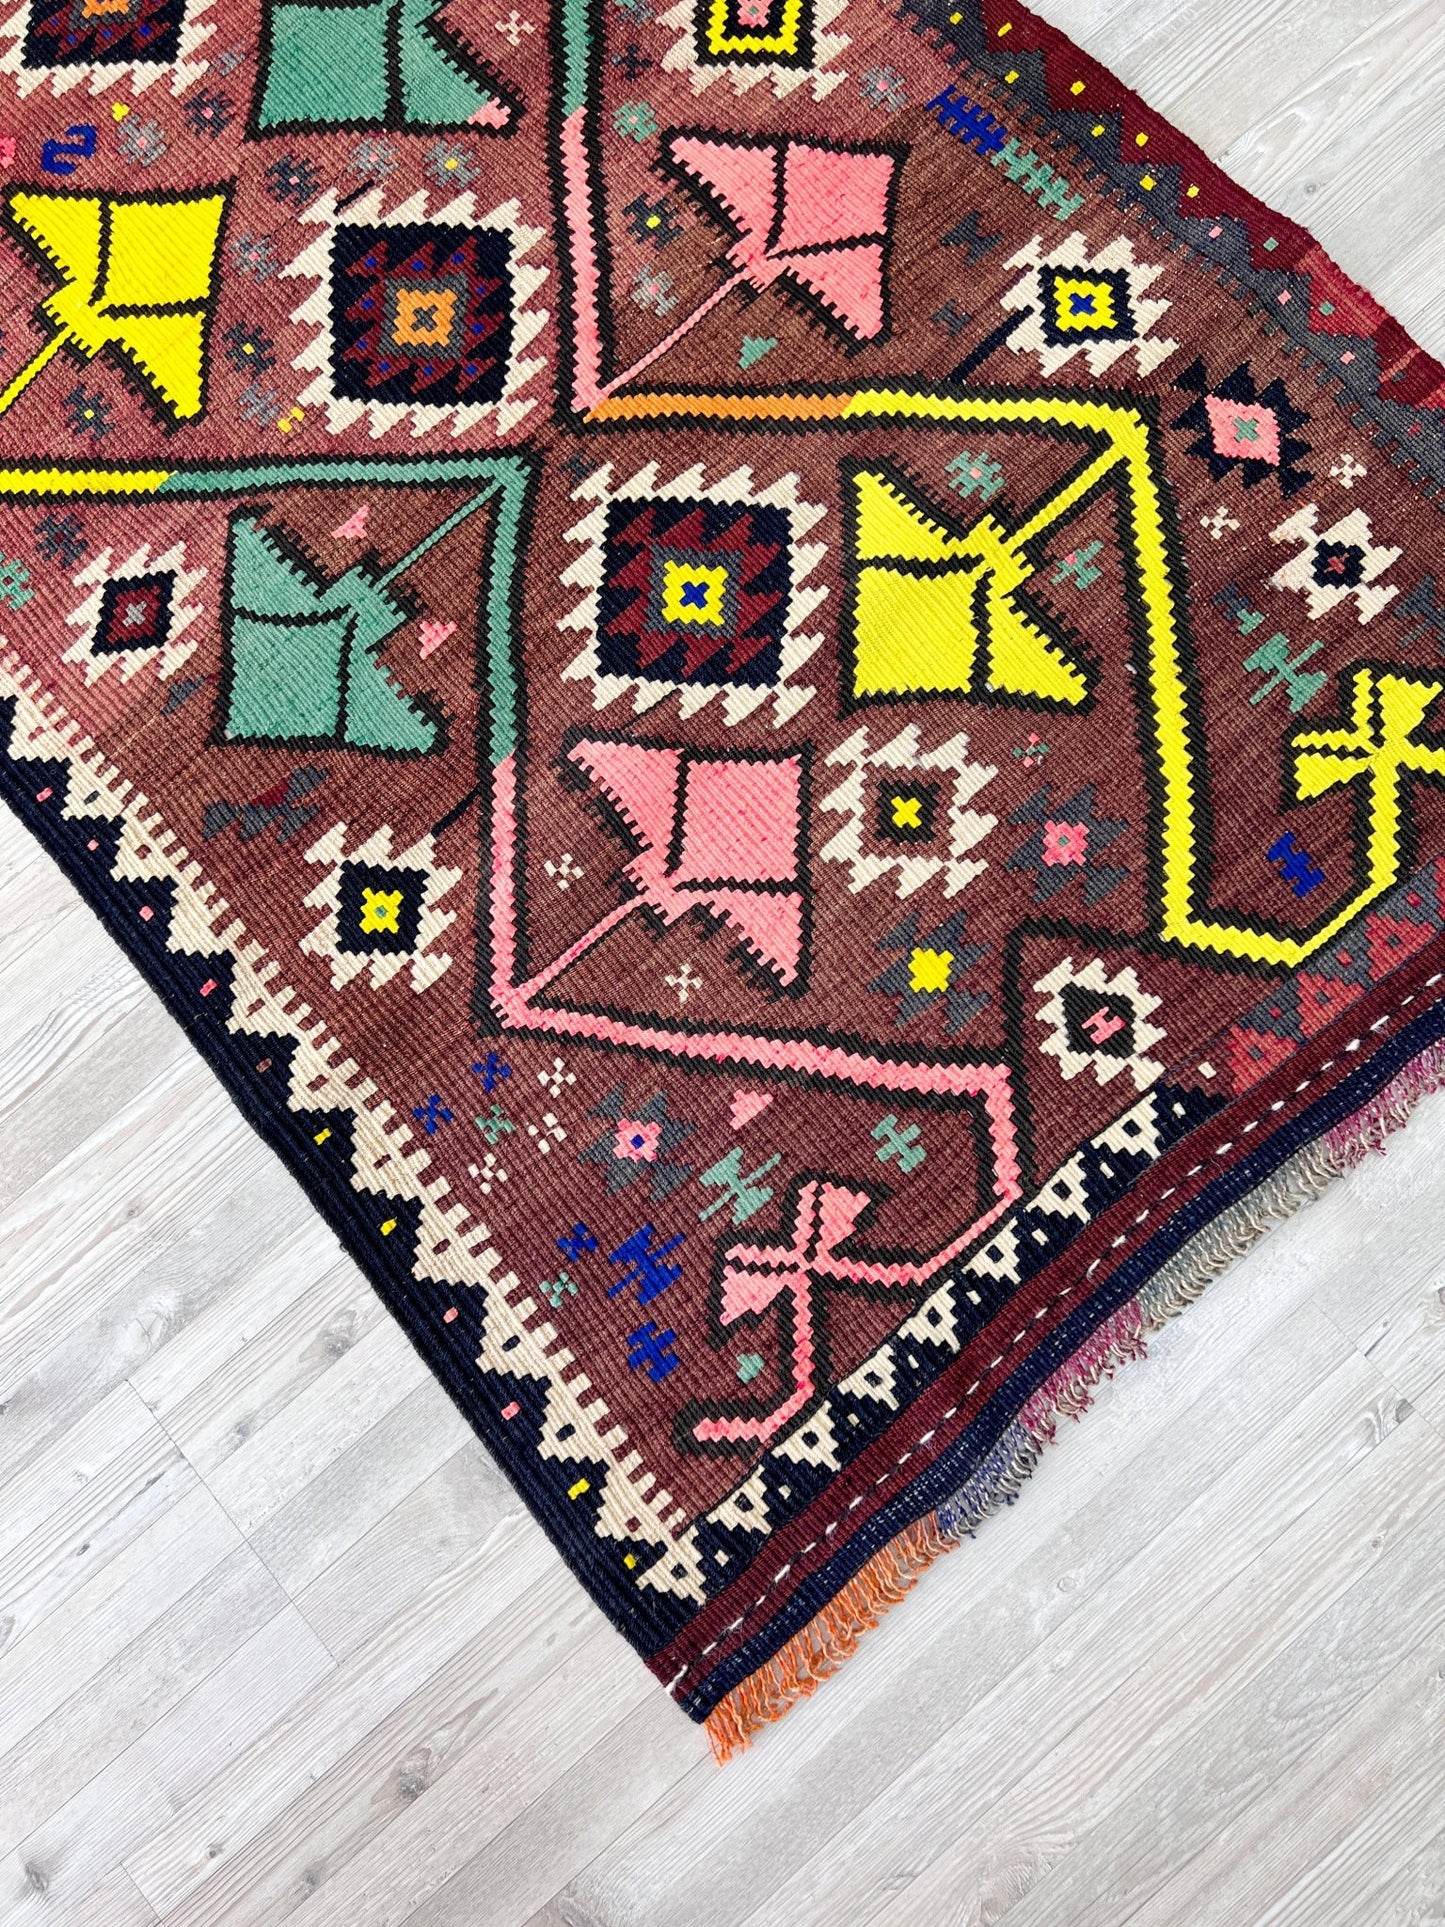 turkish kilim runner rug shopping palo alto oriental rug shop san francisco bay area berkeley buy rug online california